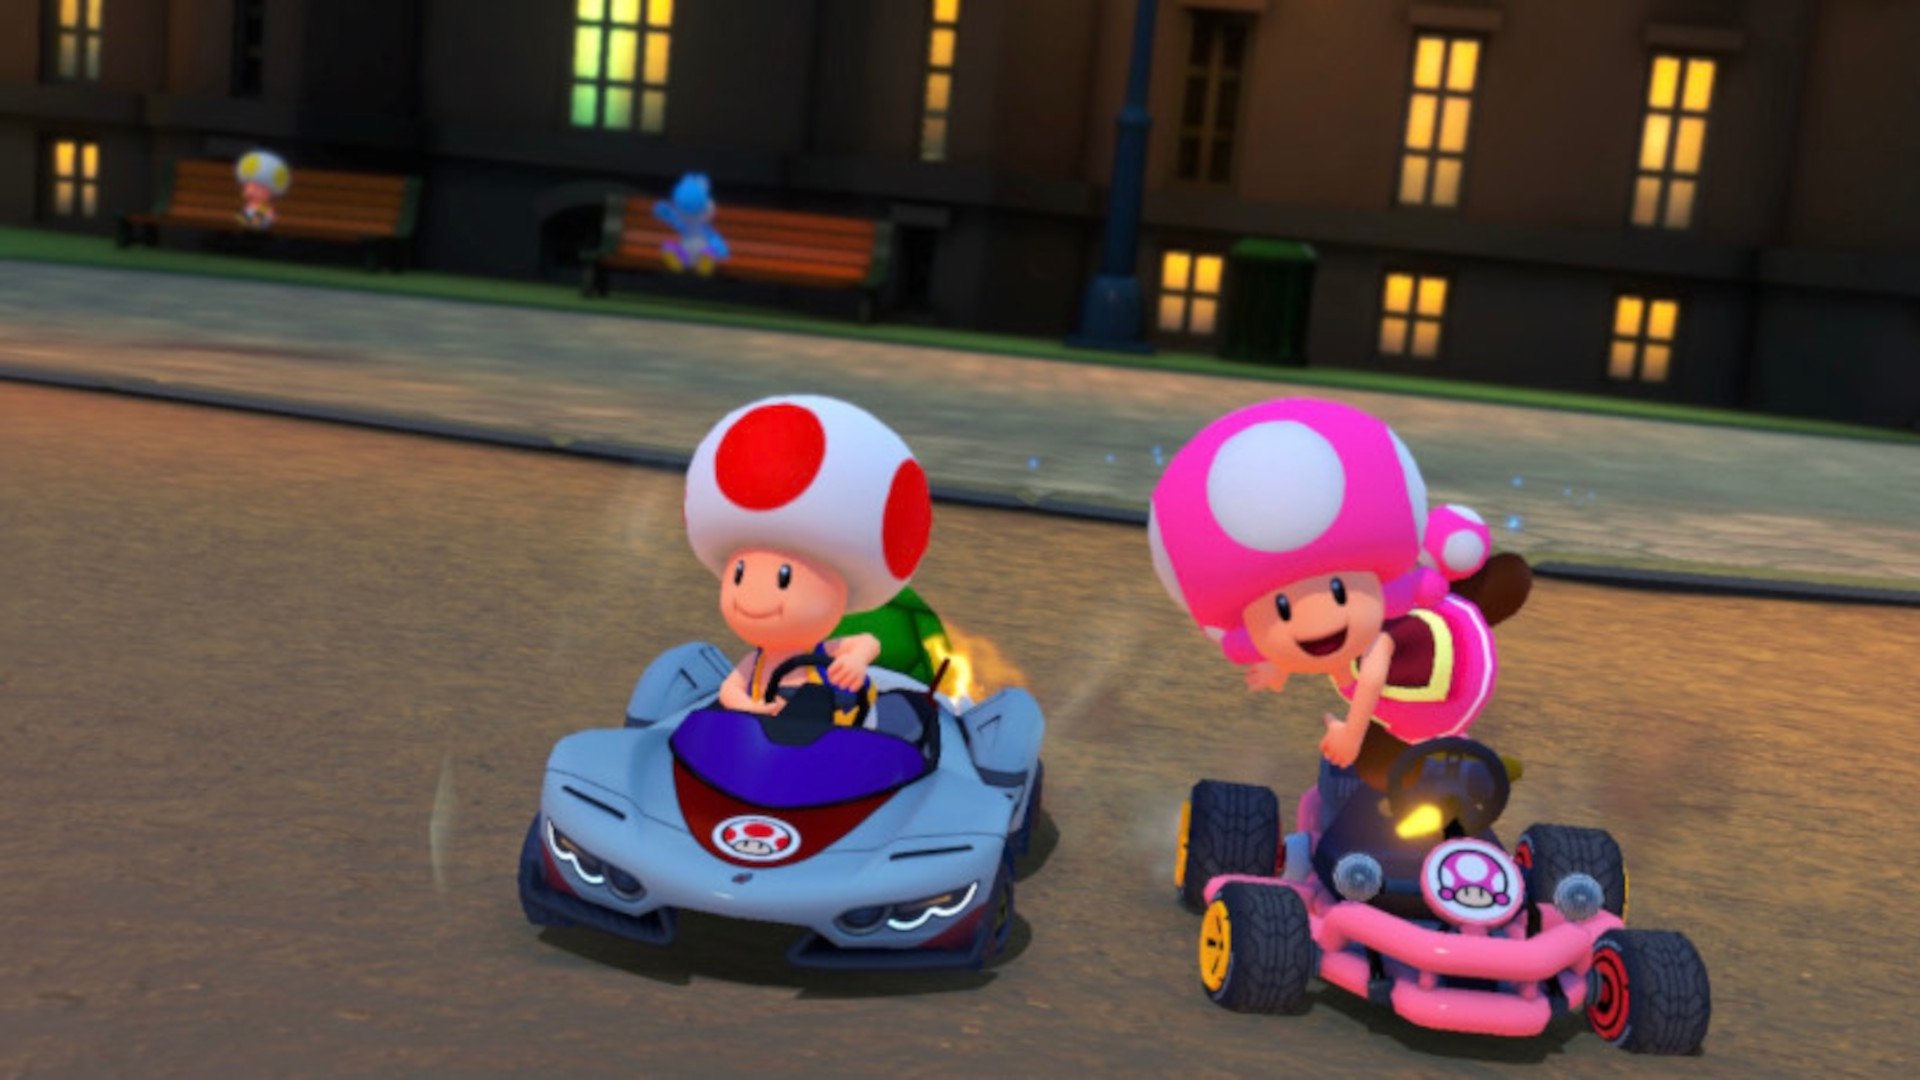 Mario Kart Tour To Enter Maintenance Mode In October - News